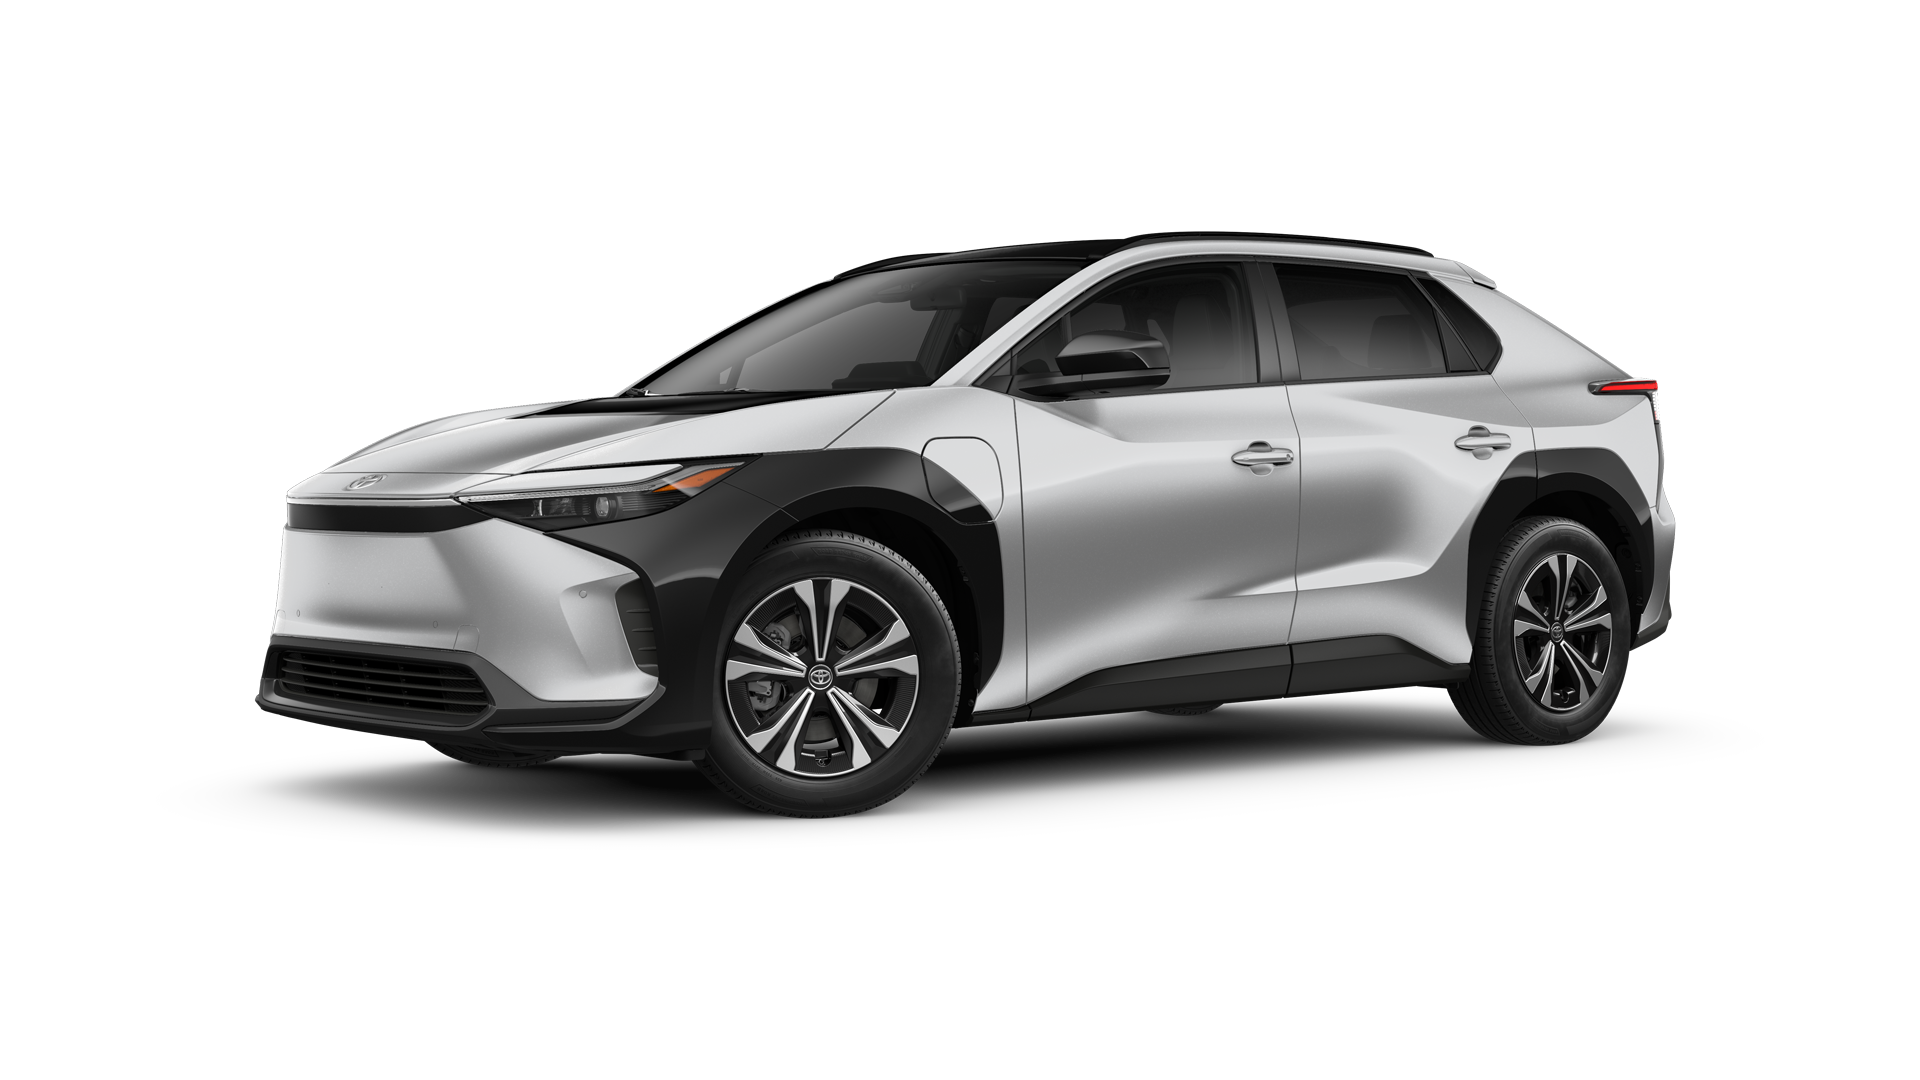 2024 Toyota bZ4X in Elemental Silver Metallic*.